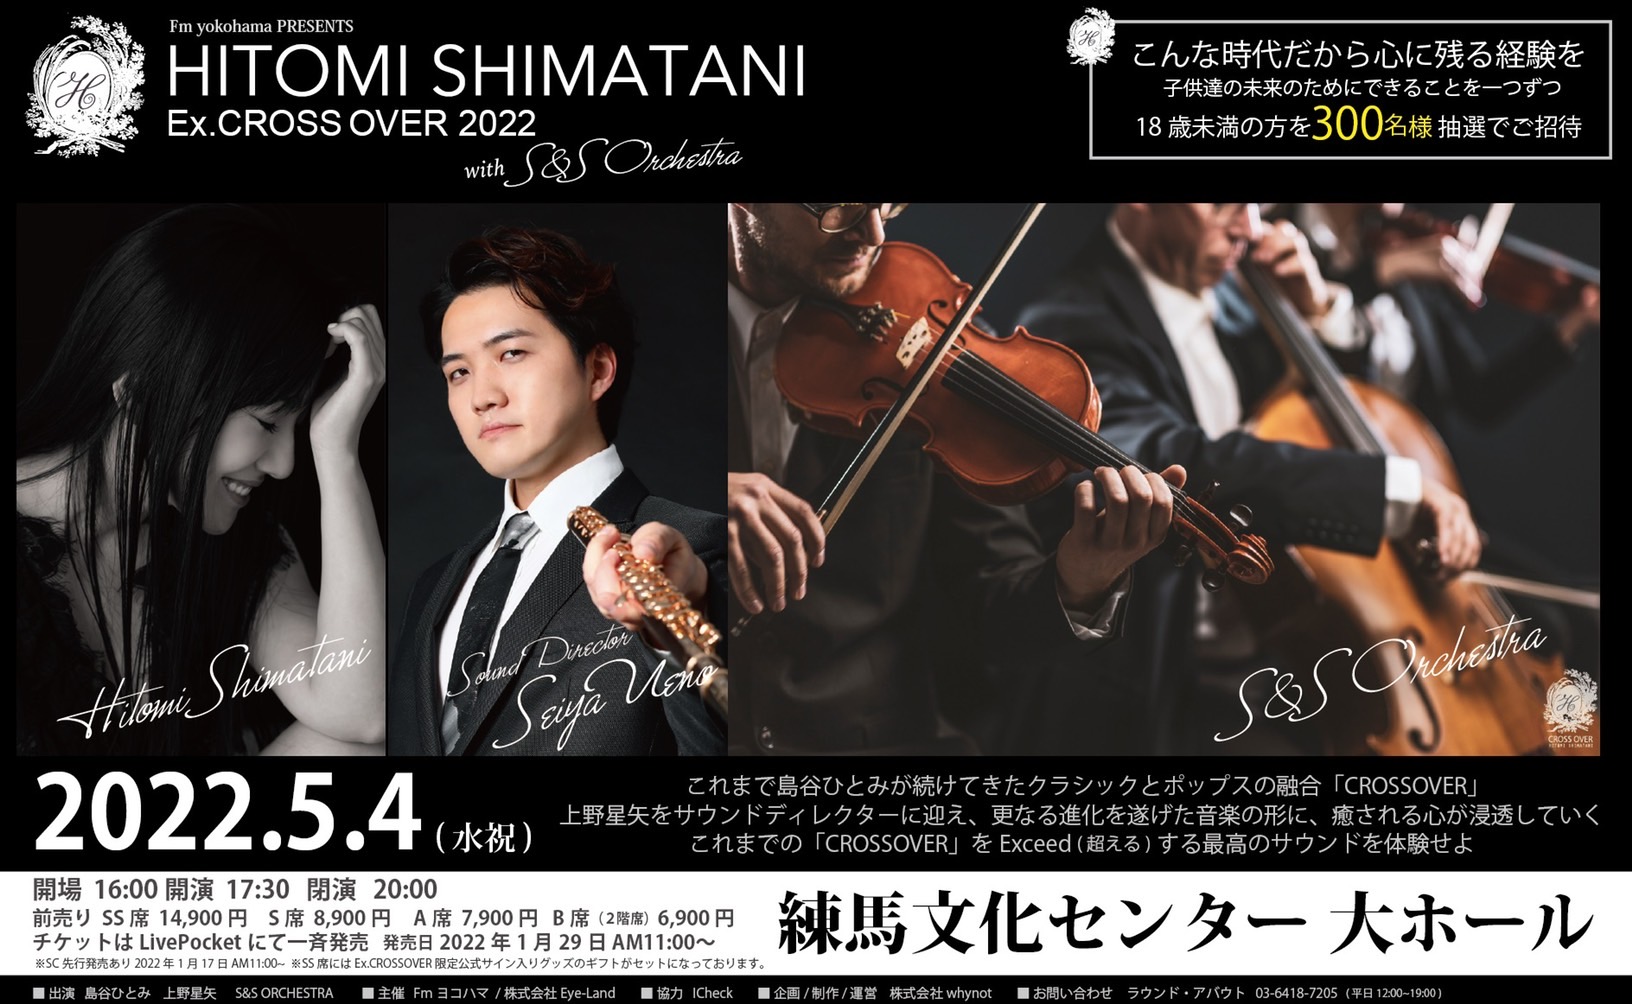 Fm yokohama PRESENTS HITOMI SHIMATANI Ex.CROSSOVER 2022 with S&S Orchestra